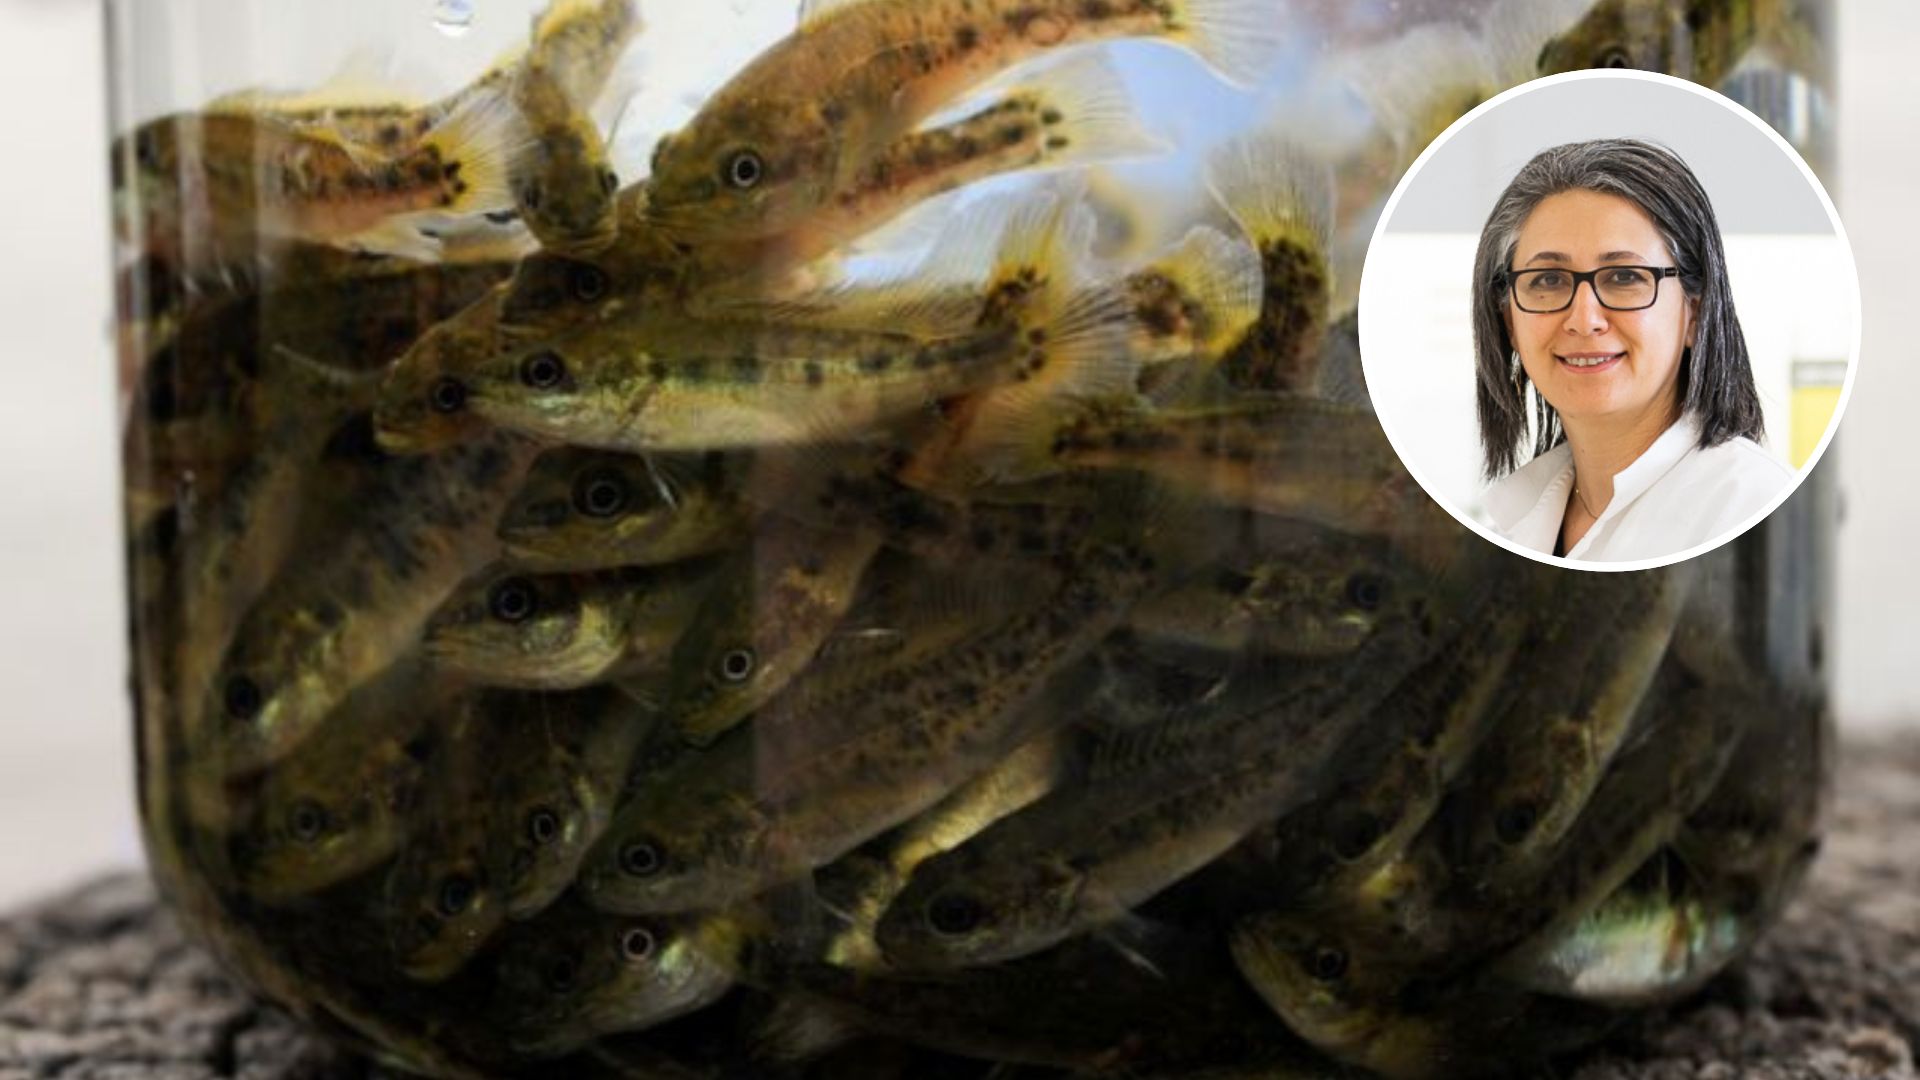 Dangerous parasites found in Australia’s freshwater fish 